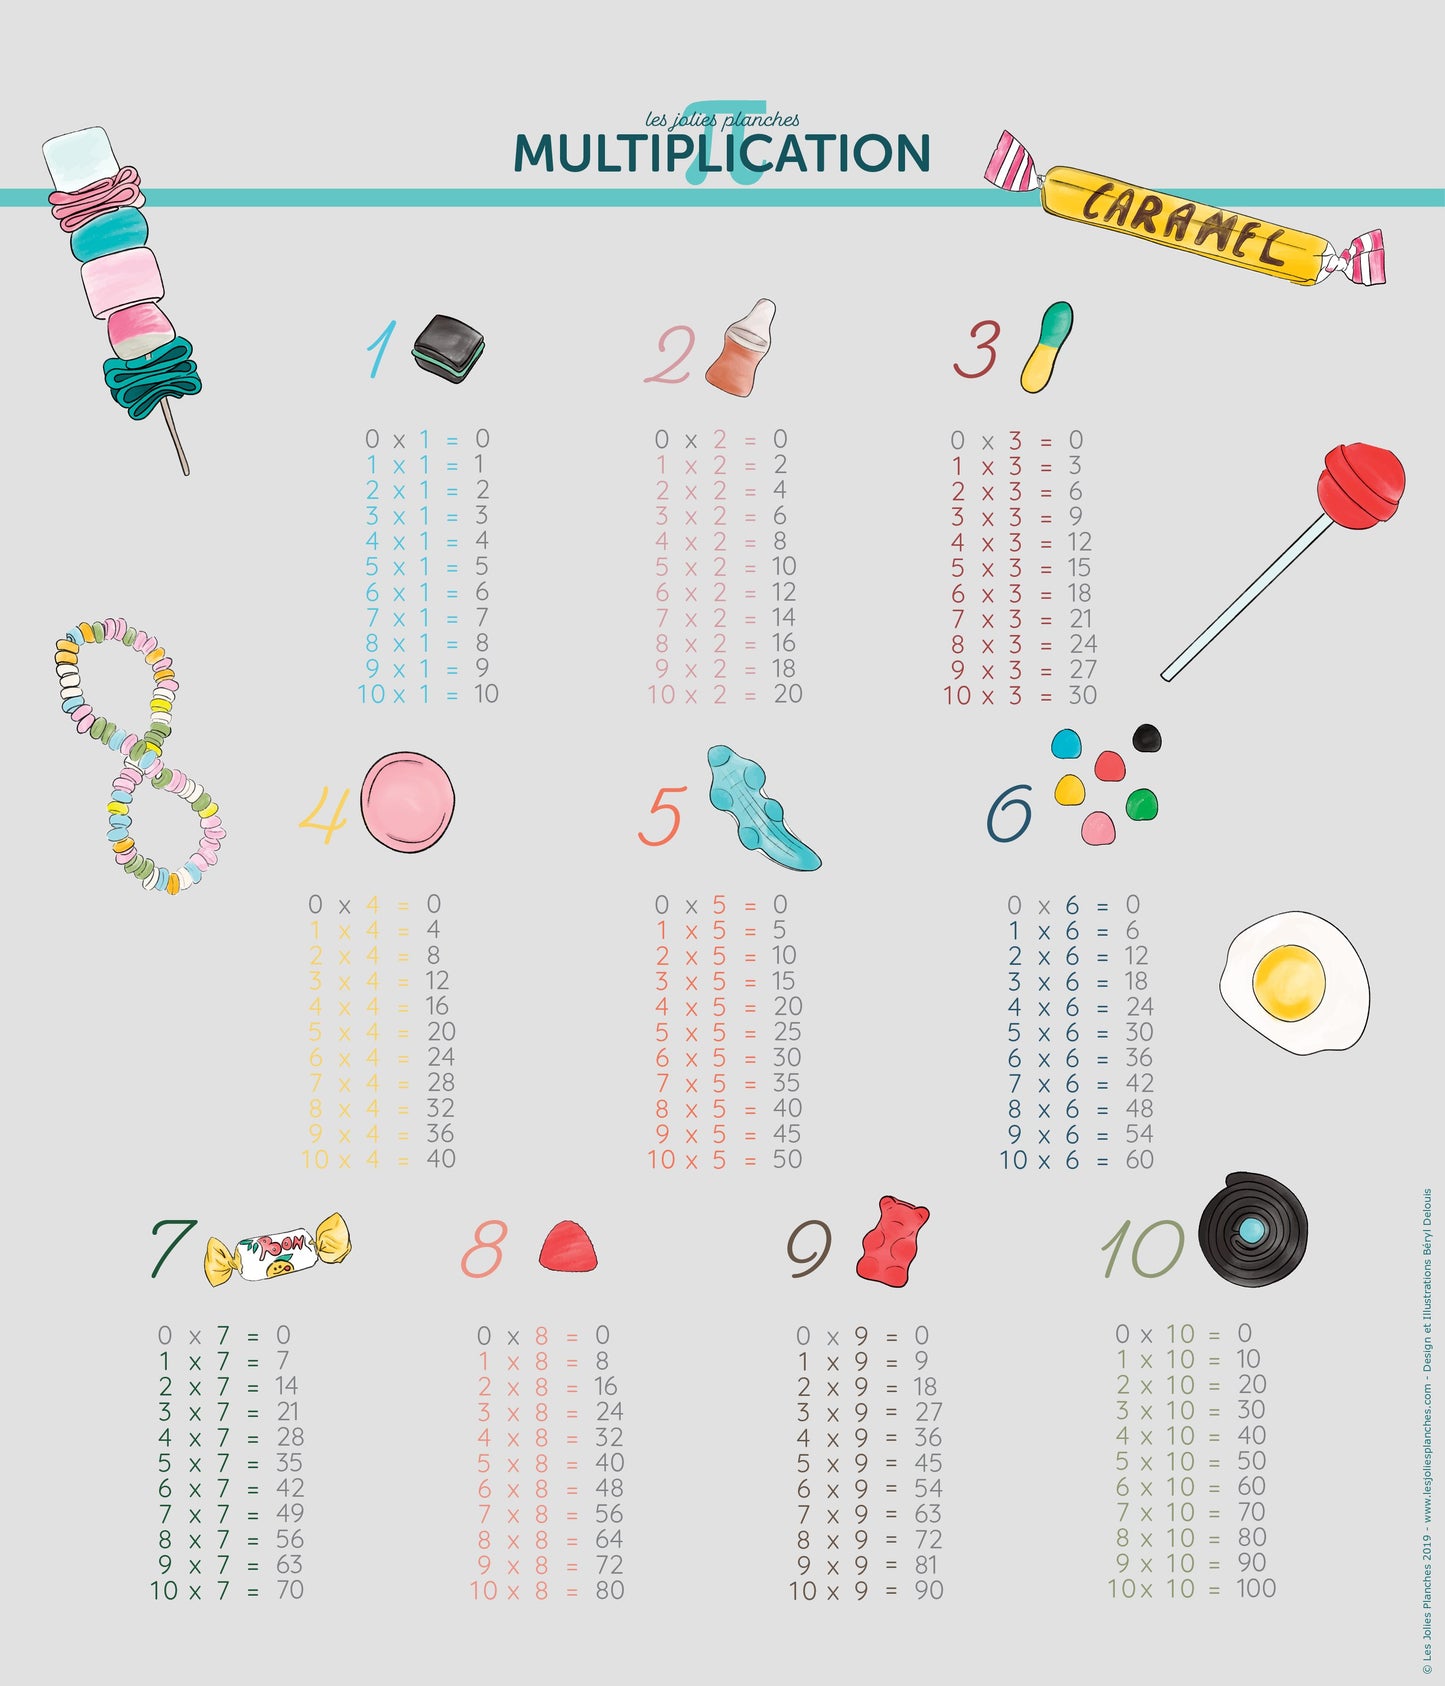 Conjugaison & multiplication